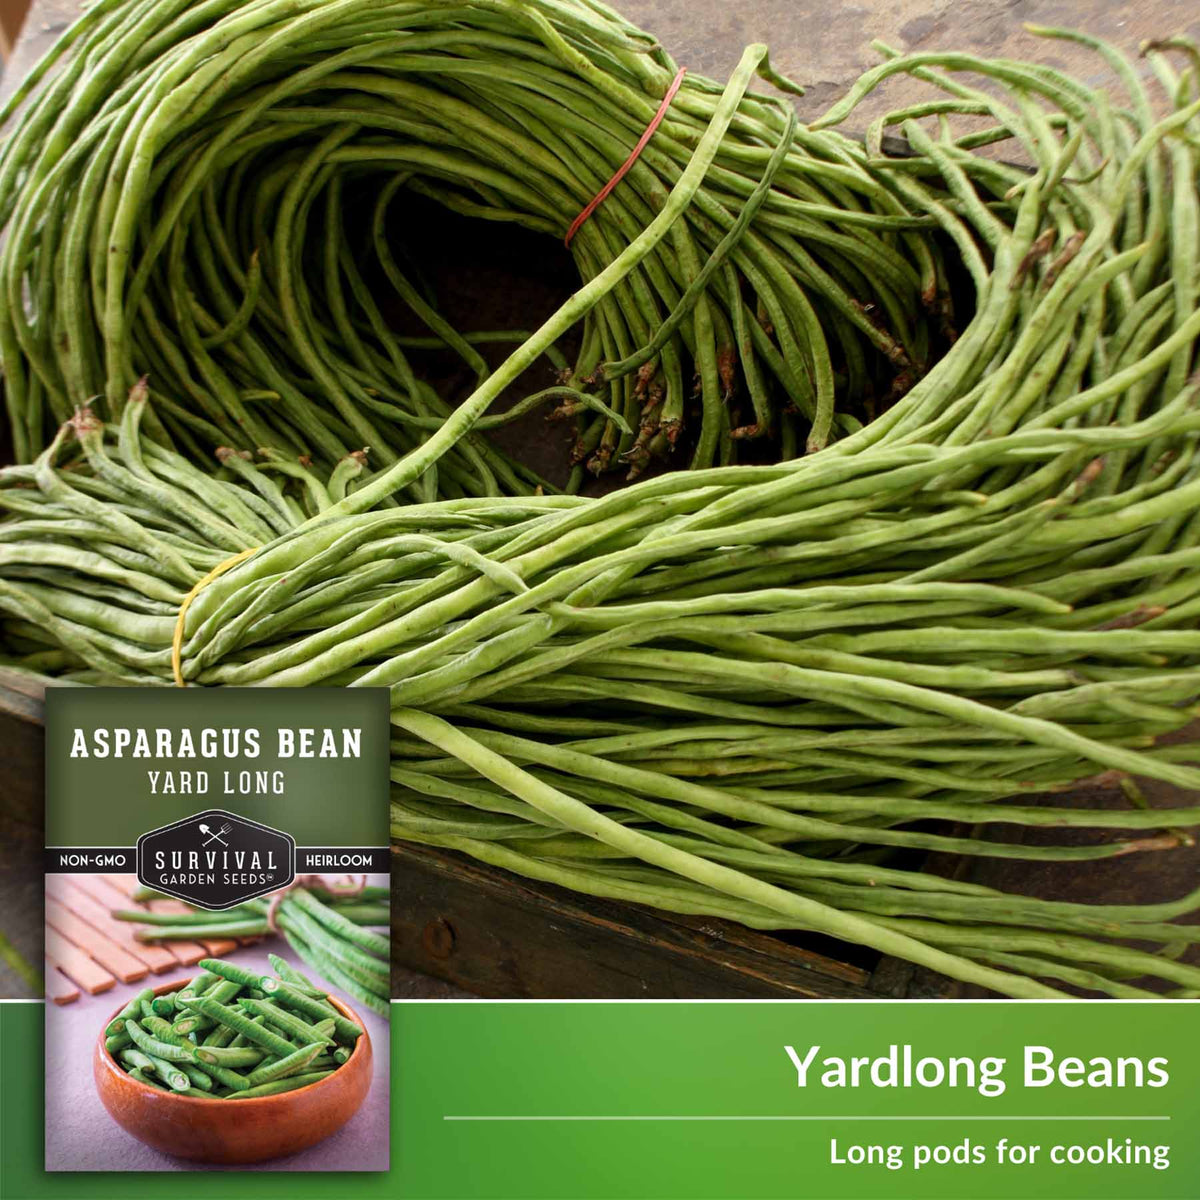 Yardlong beans